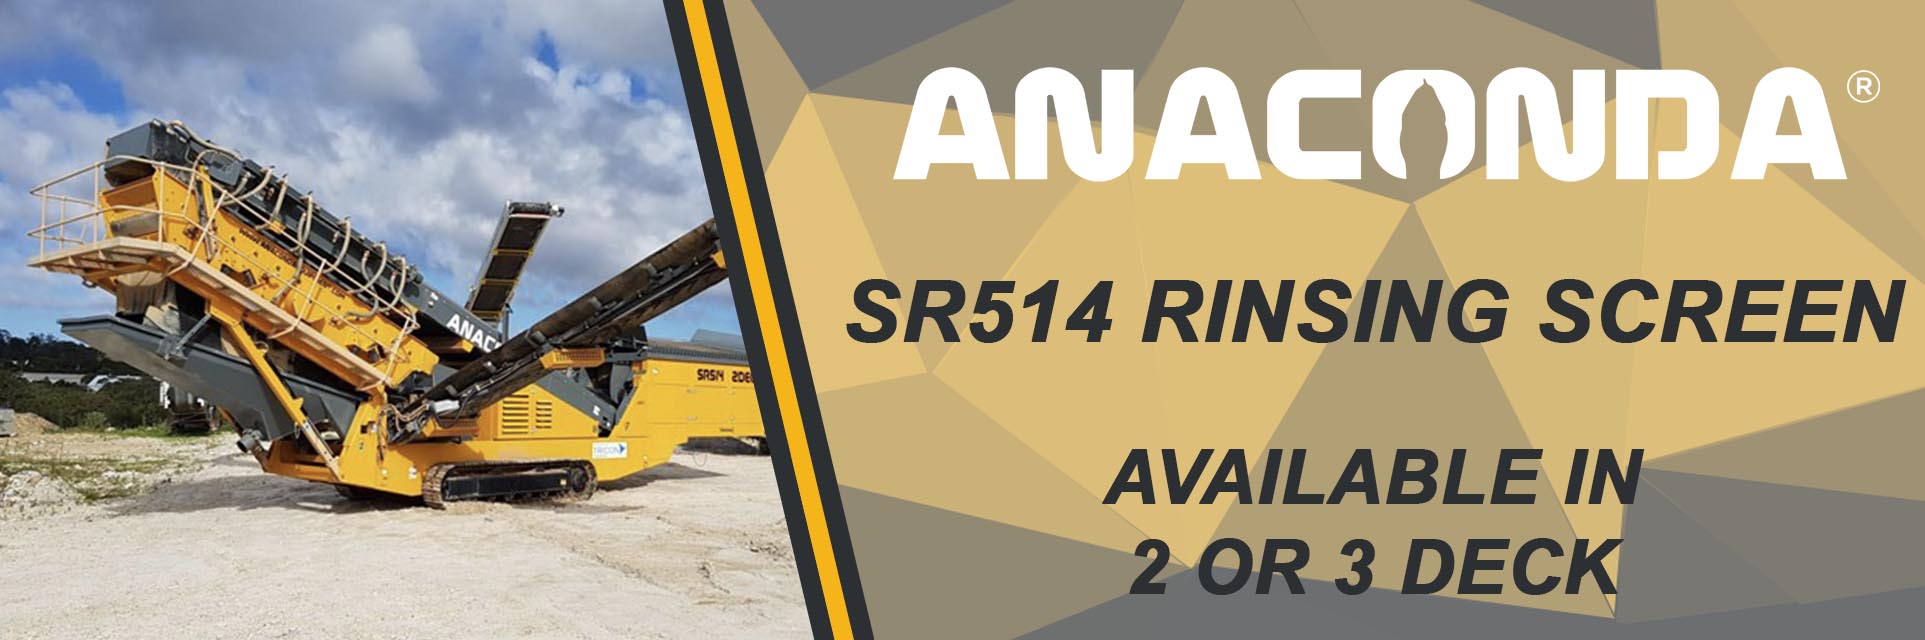 Anaconda SR514 Rinsing Screen Banner